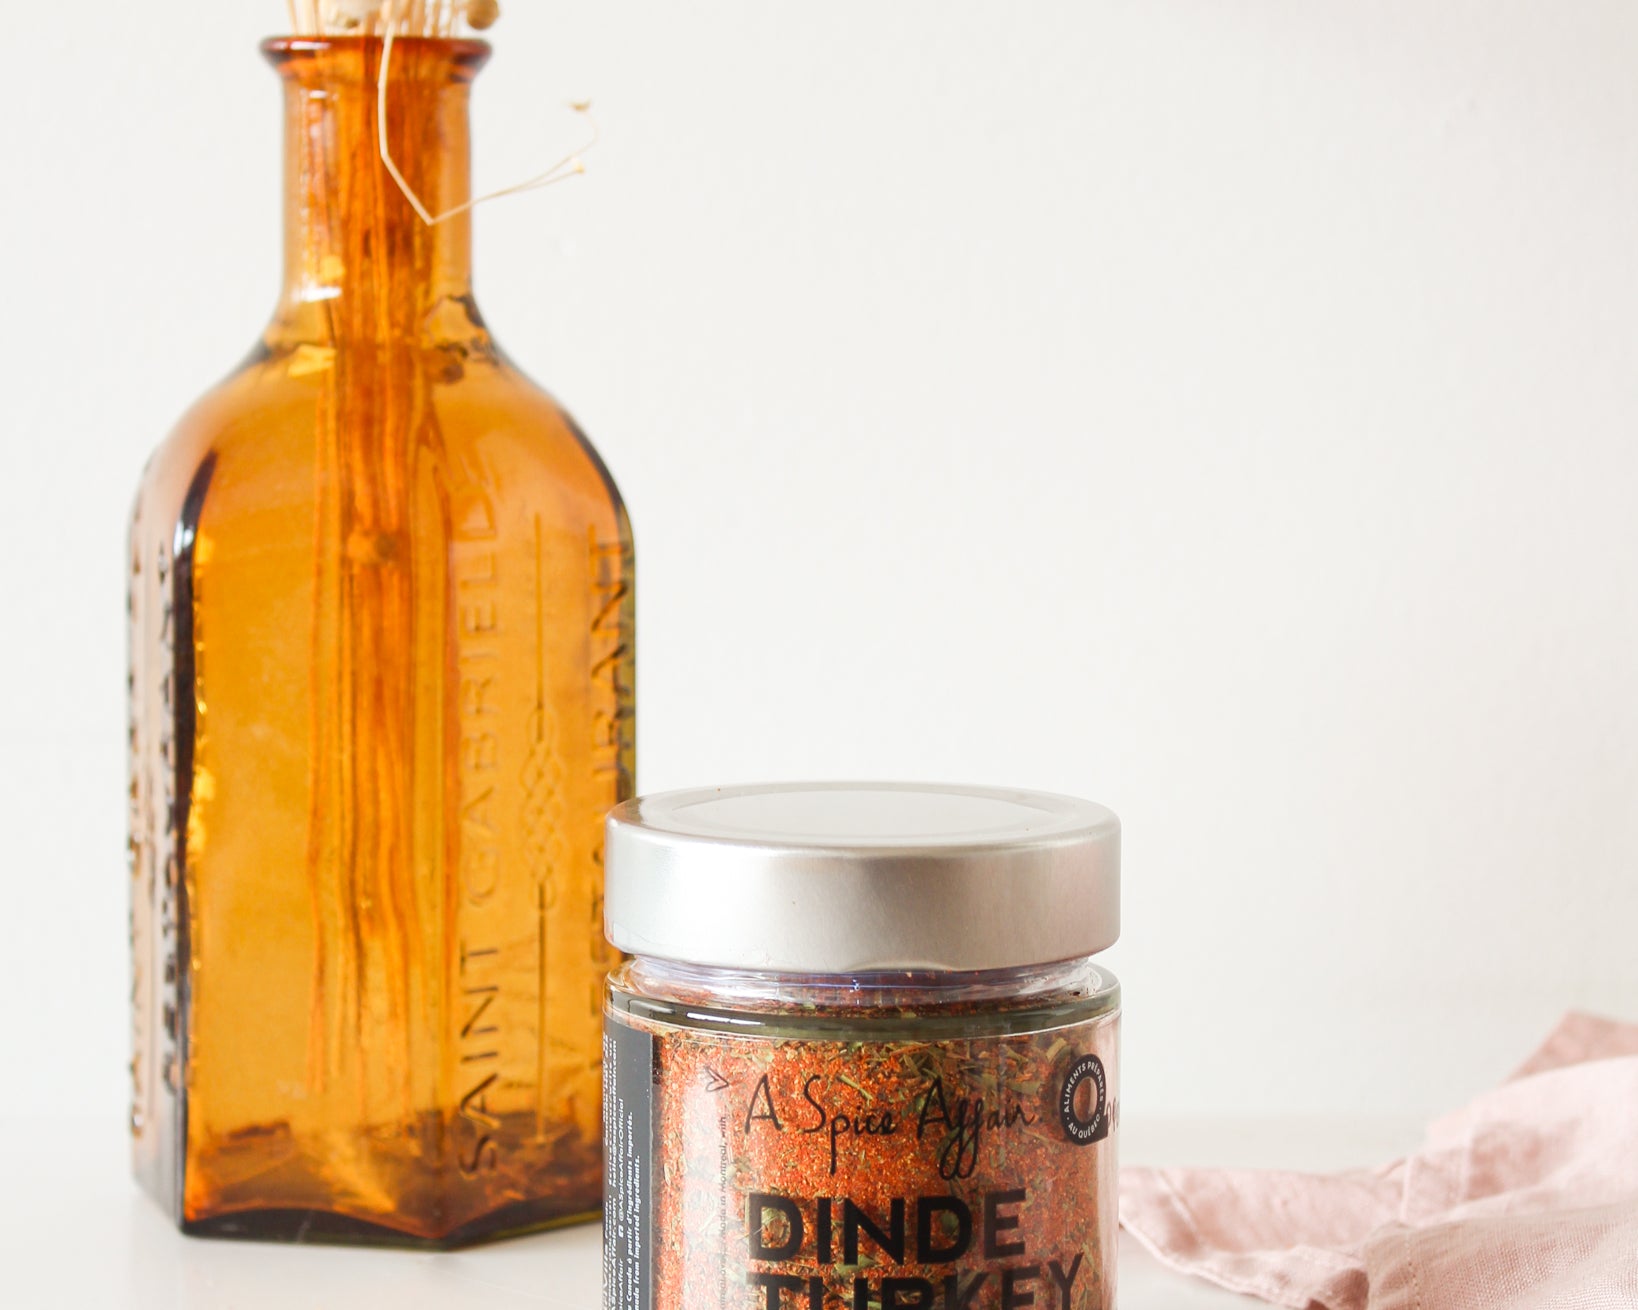 Épices Dinde - A Spice Affair